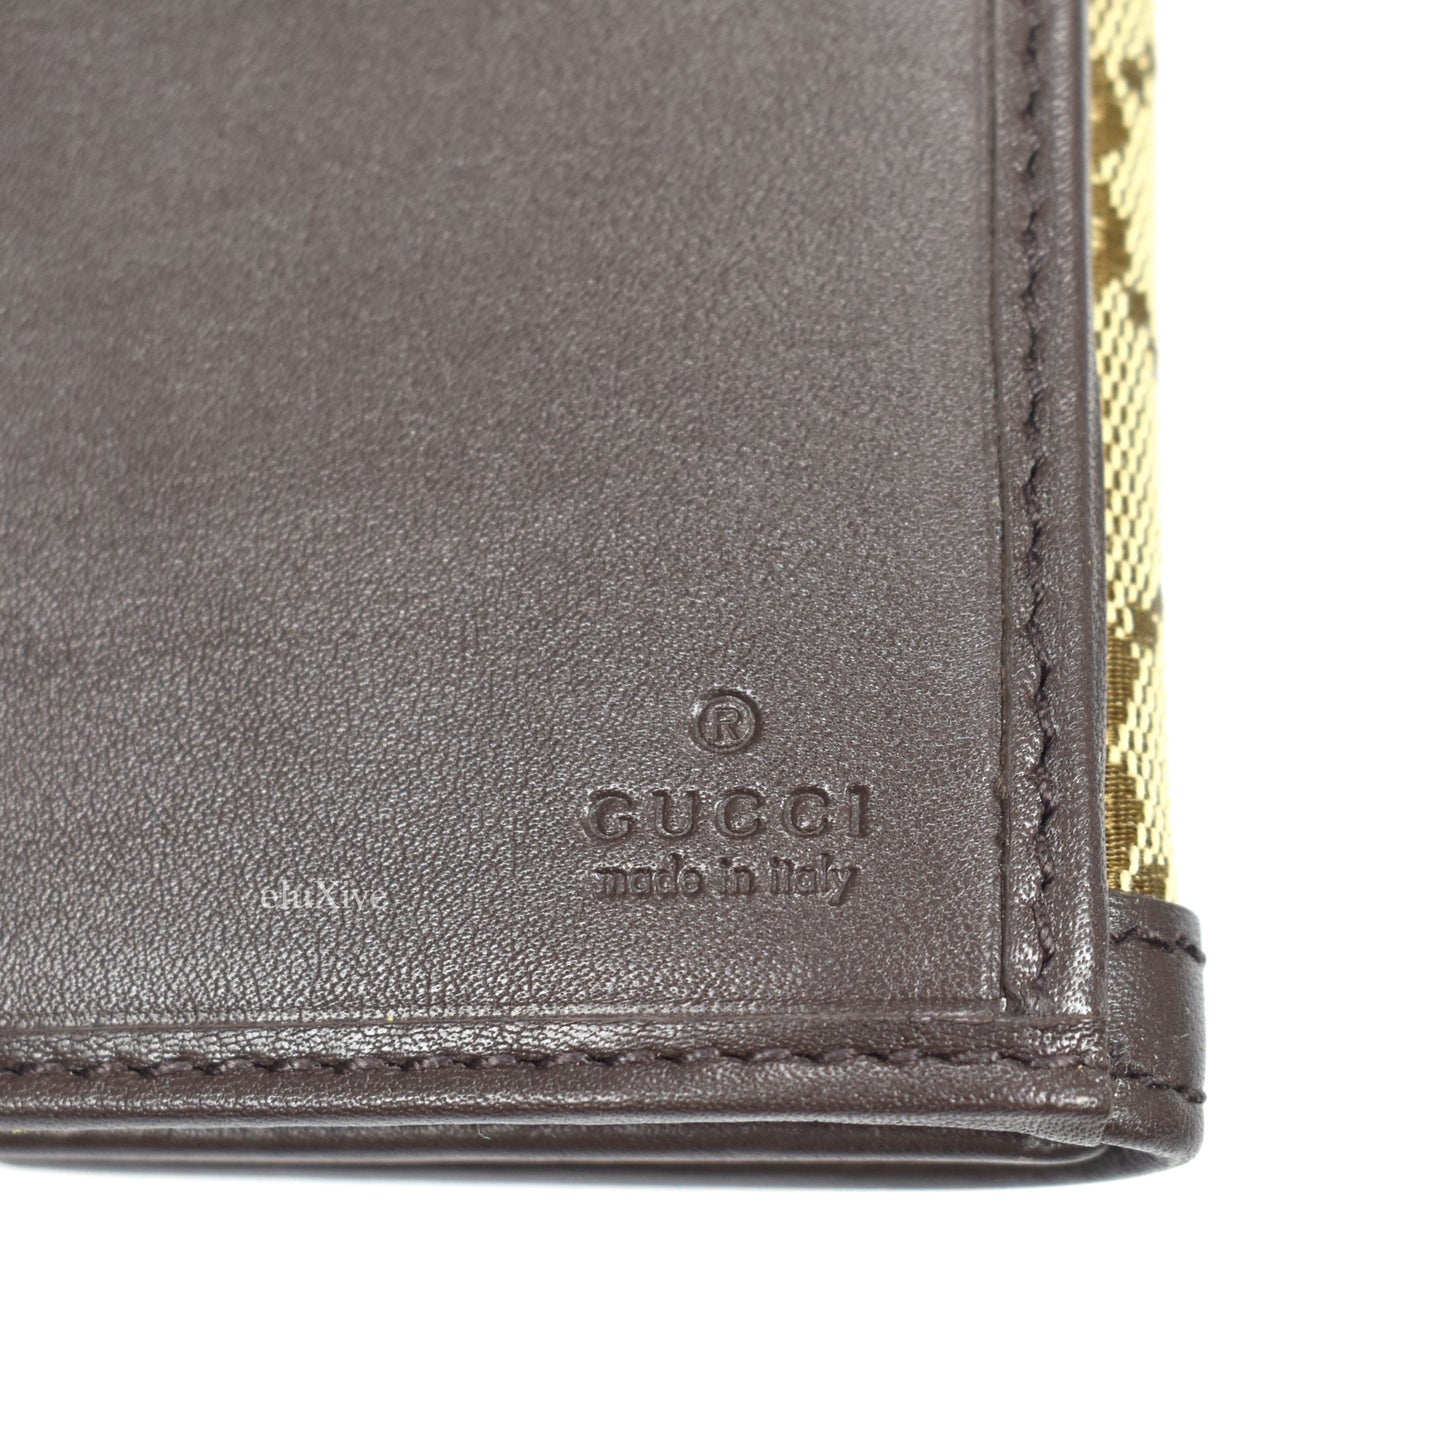 Gucci - Beige GG Logo 'Sukey' Continental Wallet